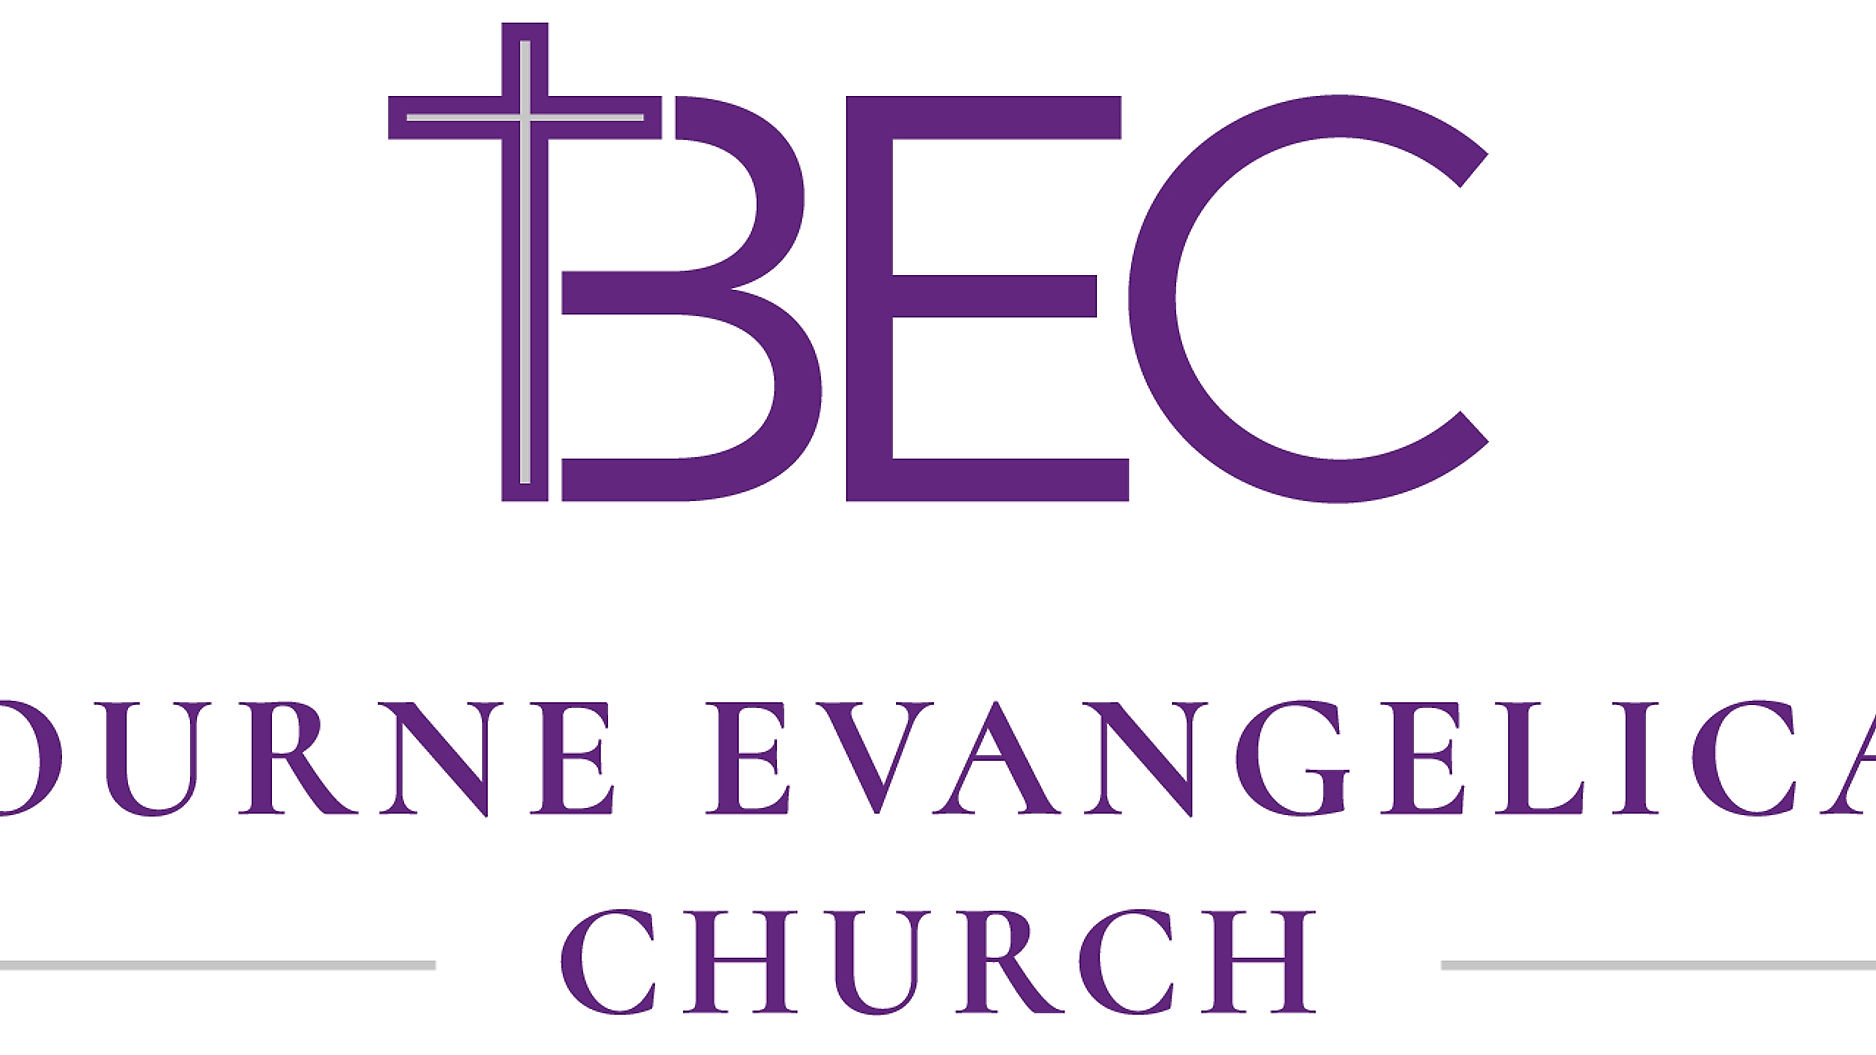 Bourne Evangelical Church